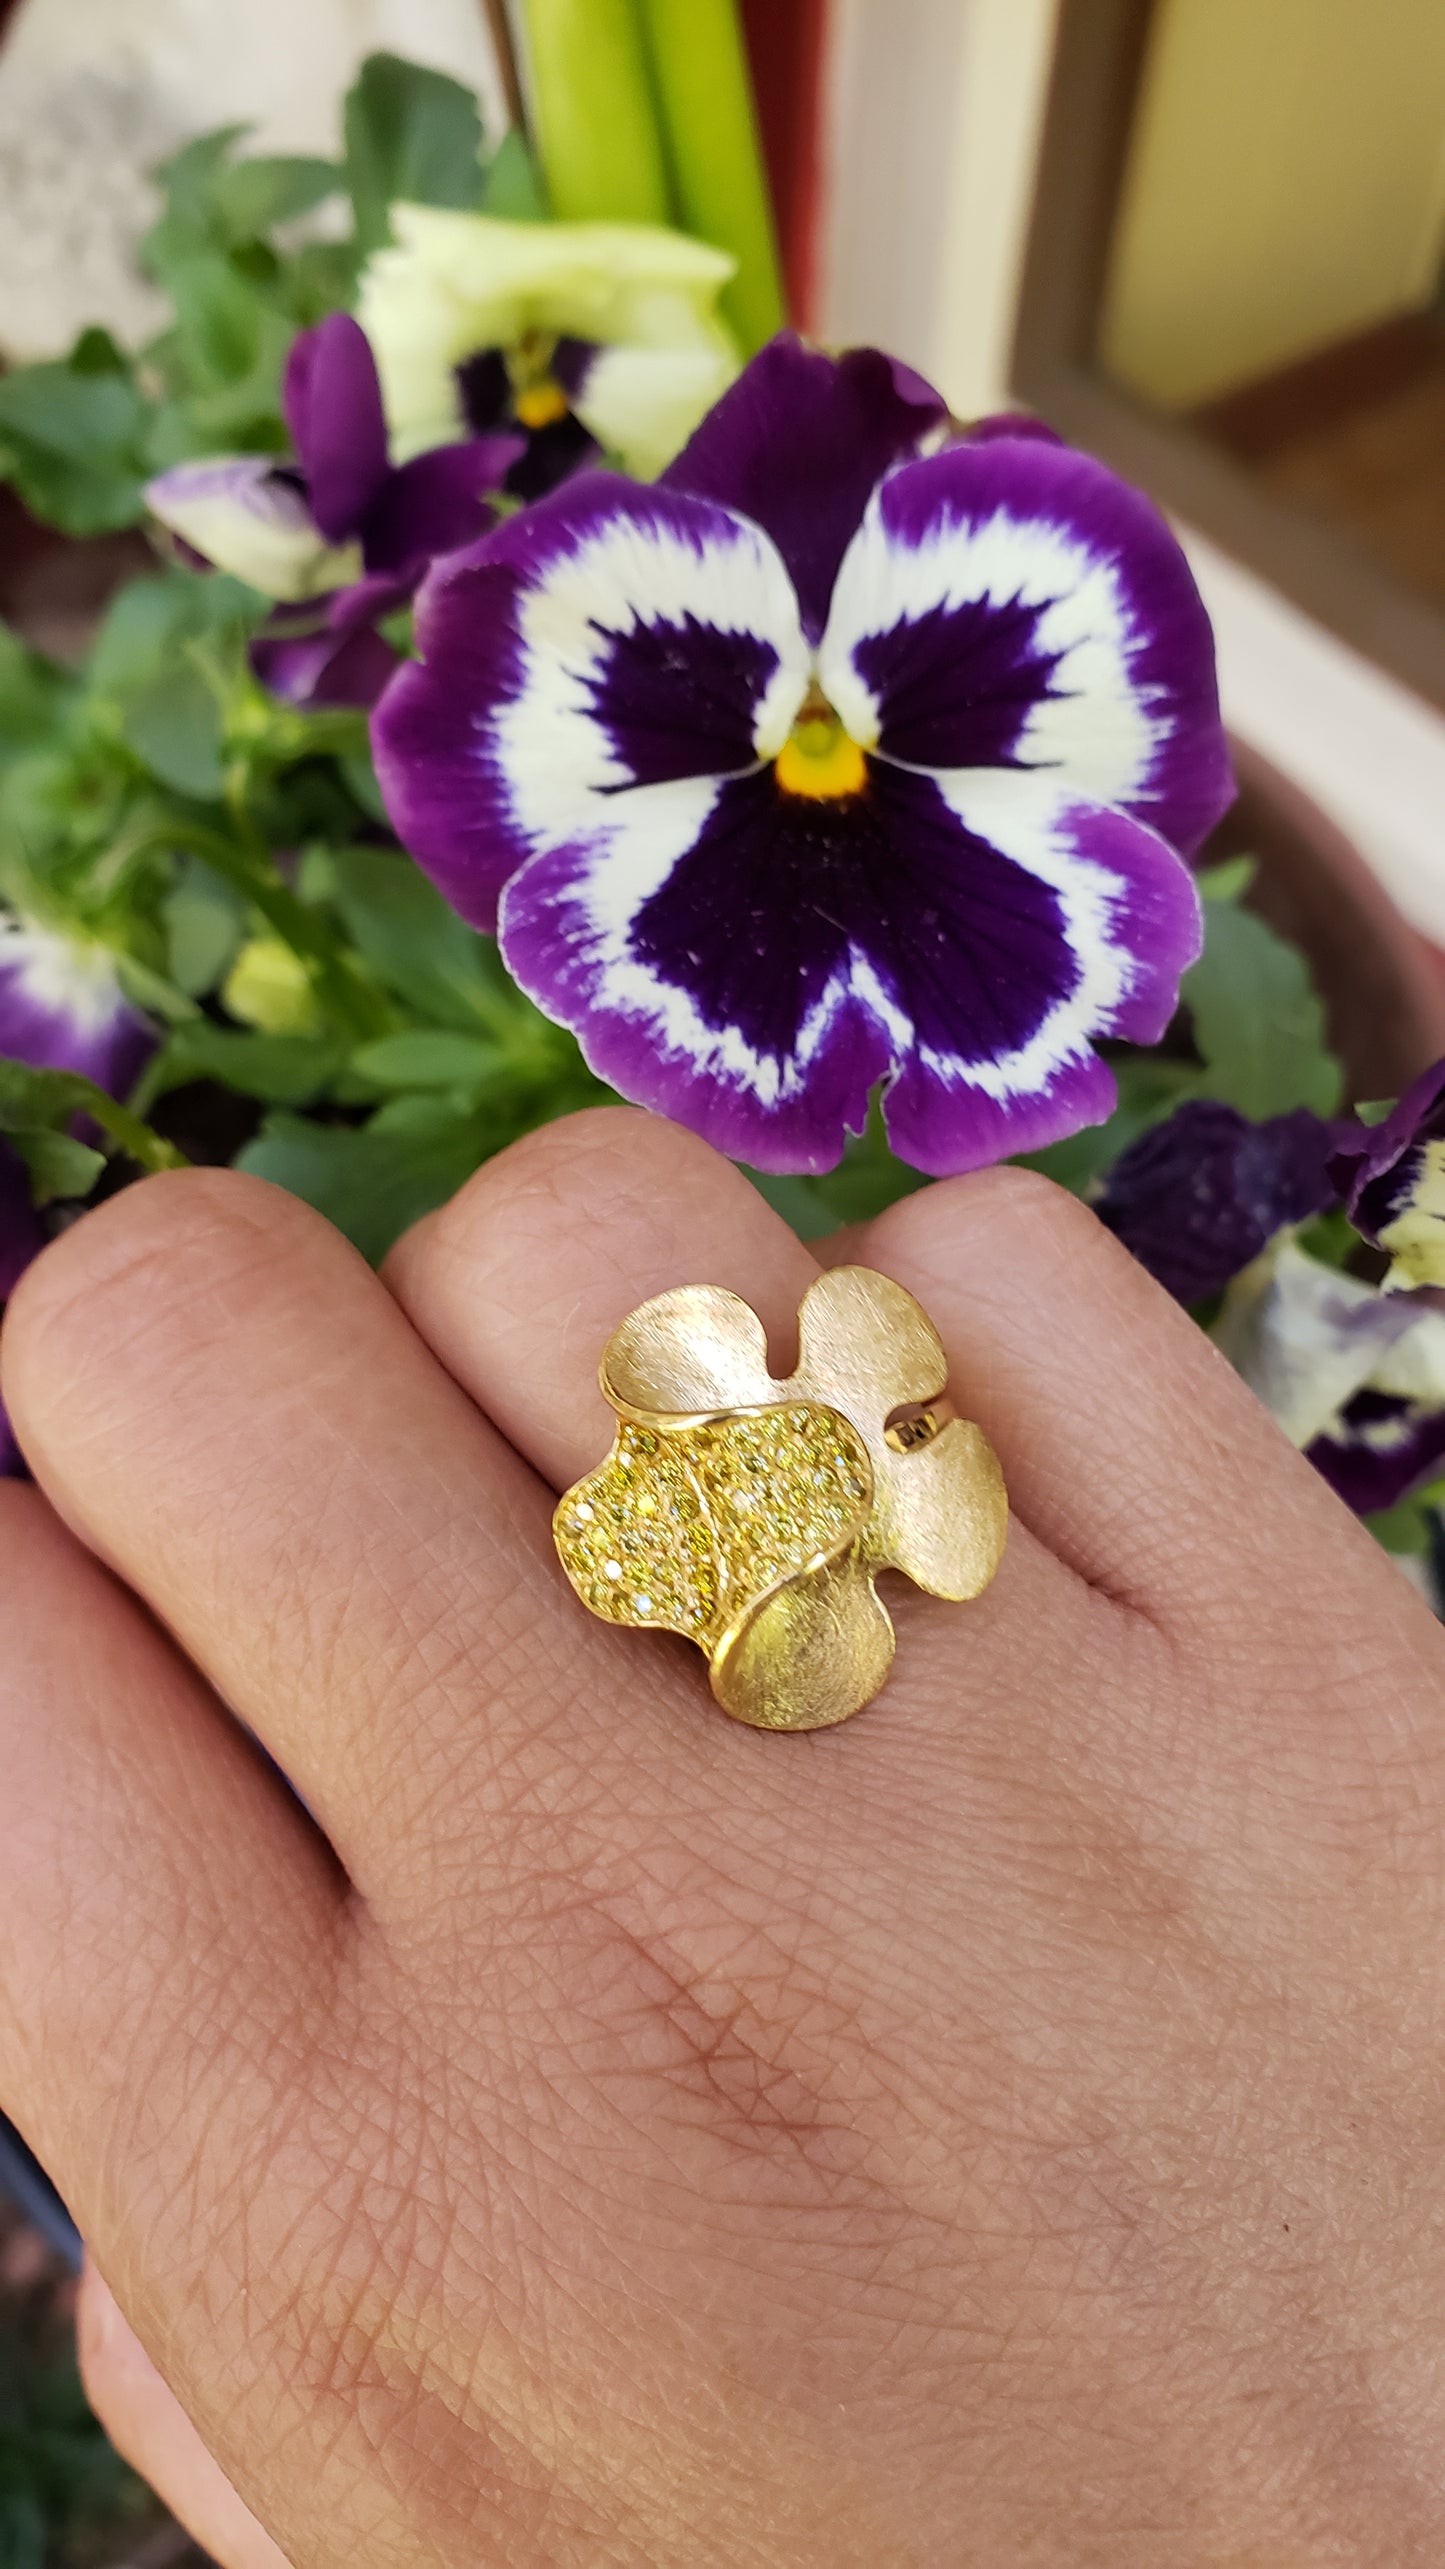 18K Yellow Gold with Yellow Diamonds Flower Ring, Satin Finish Gold